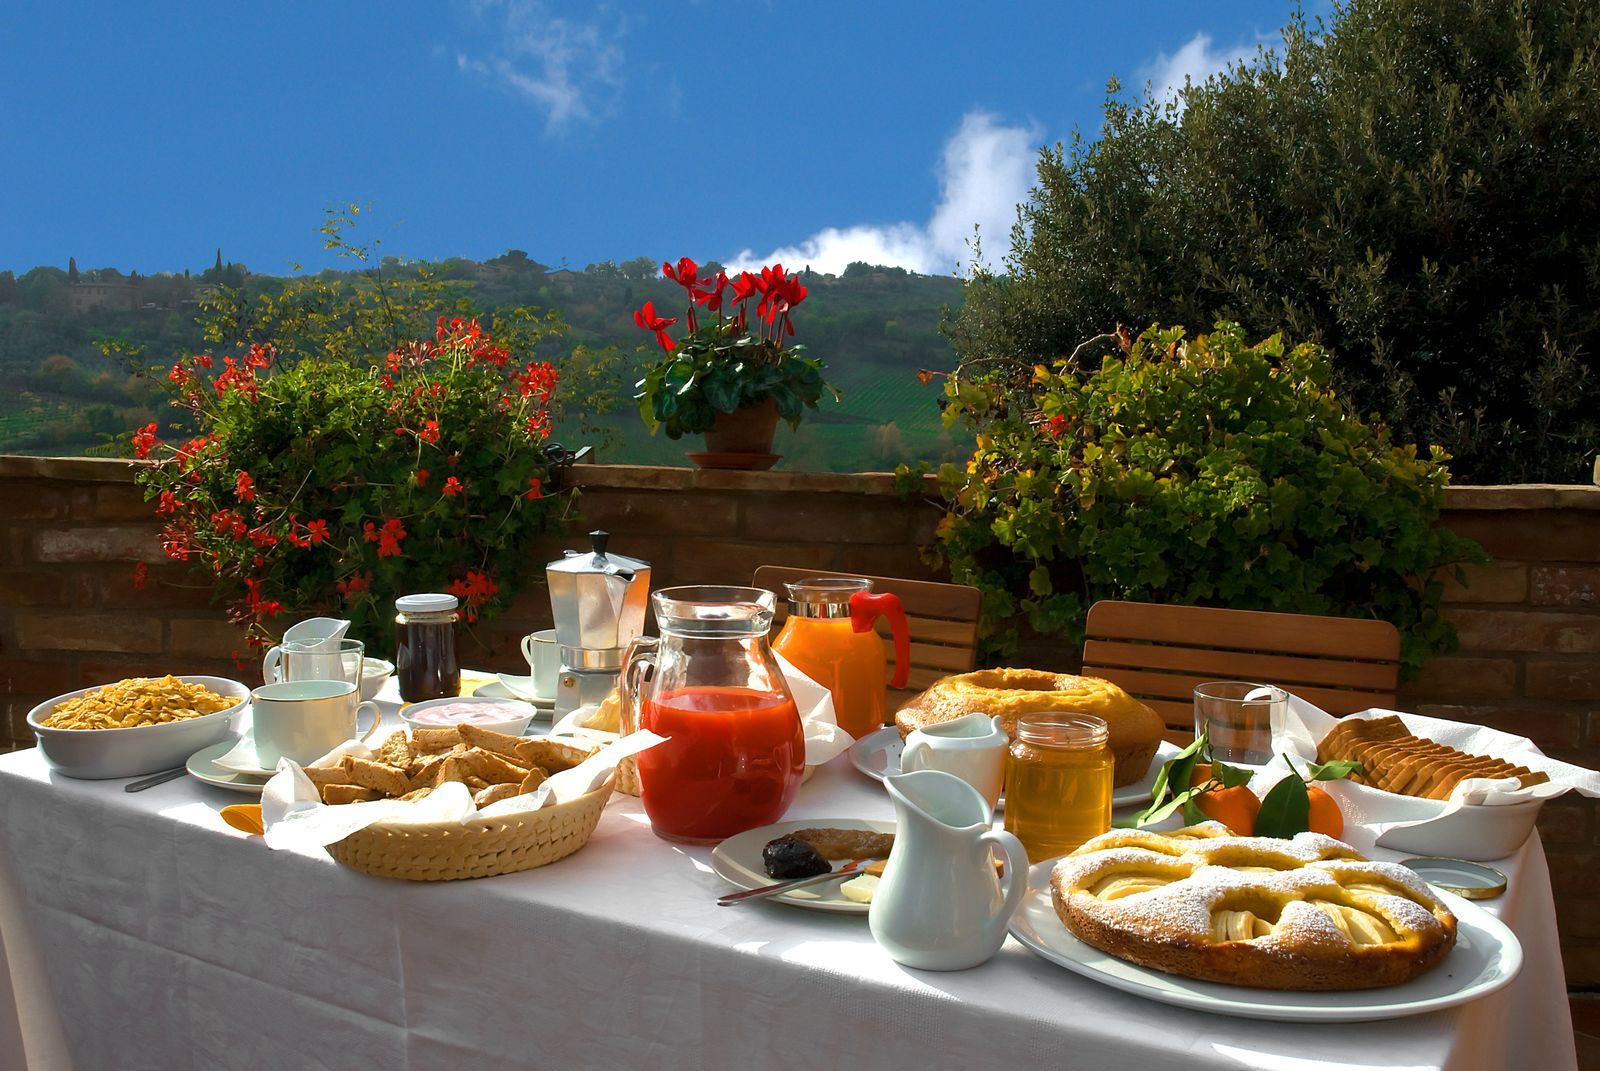 Утро пикник. Вилла Италия Тоскана завтрак. Завтрак на террасе. Завтрак на природе. Обед на веранде.